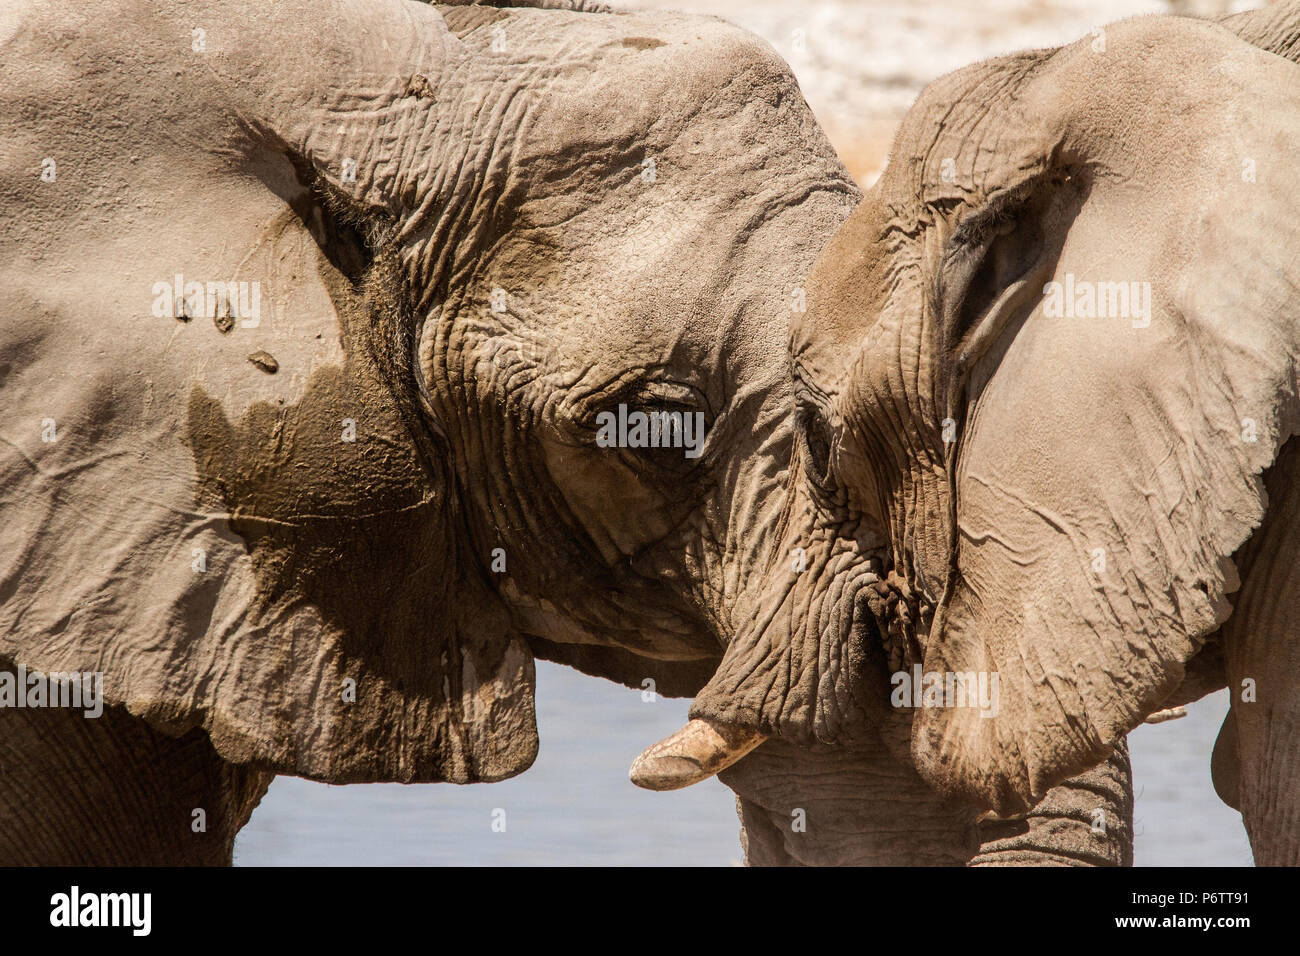 Zwei afrikanische Elefanten - Loxodonta - Kopf an Kopf, Auge in Auge - in Zuneigung oder Konfrontation? Stockfoto